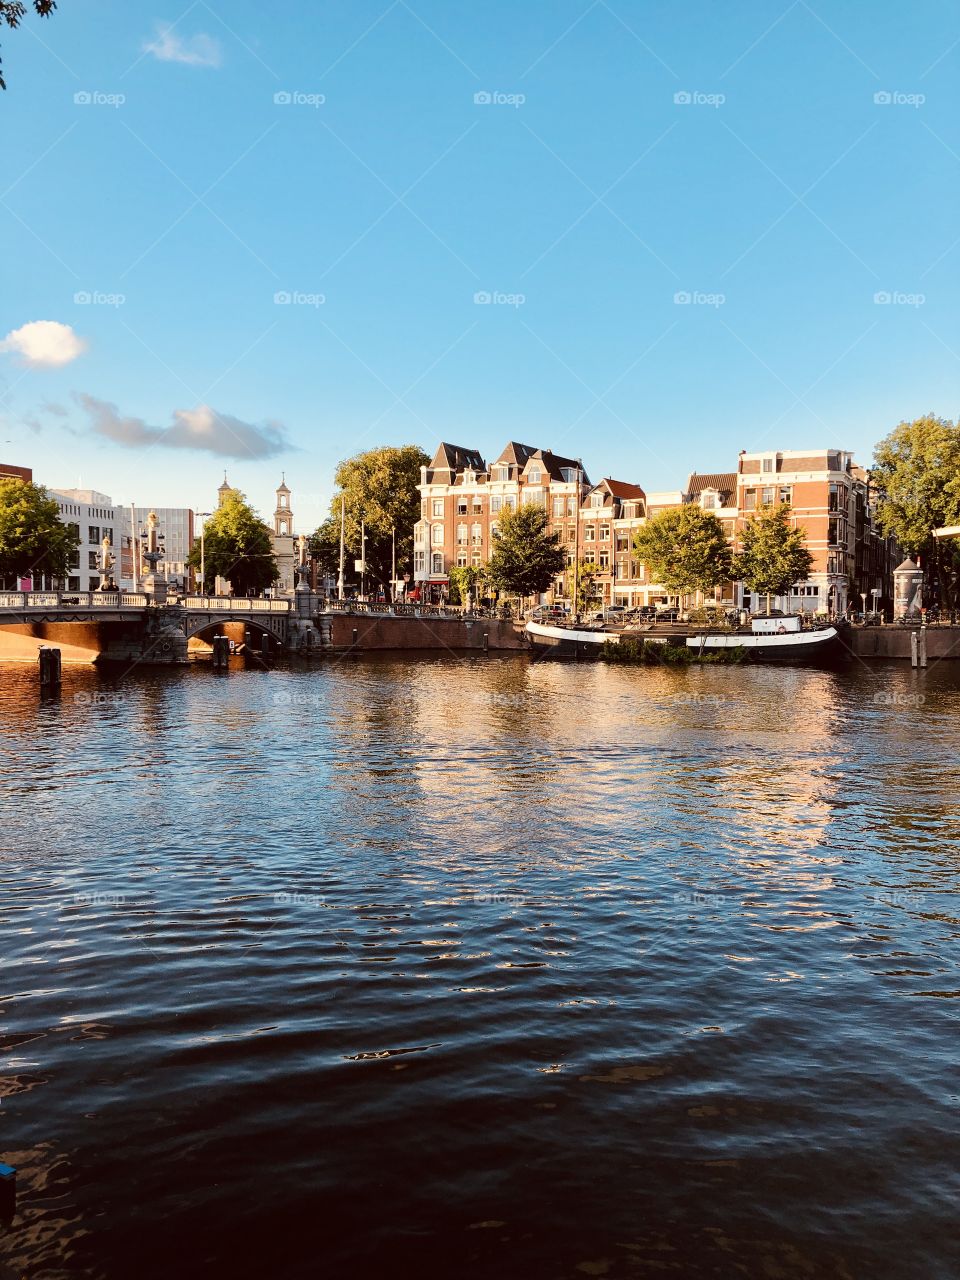 Amsterdam in summer 